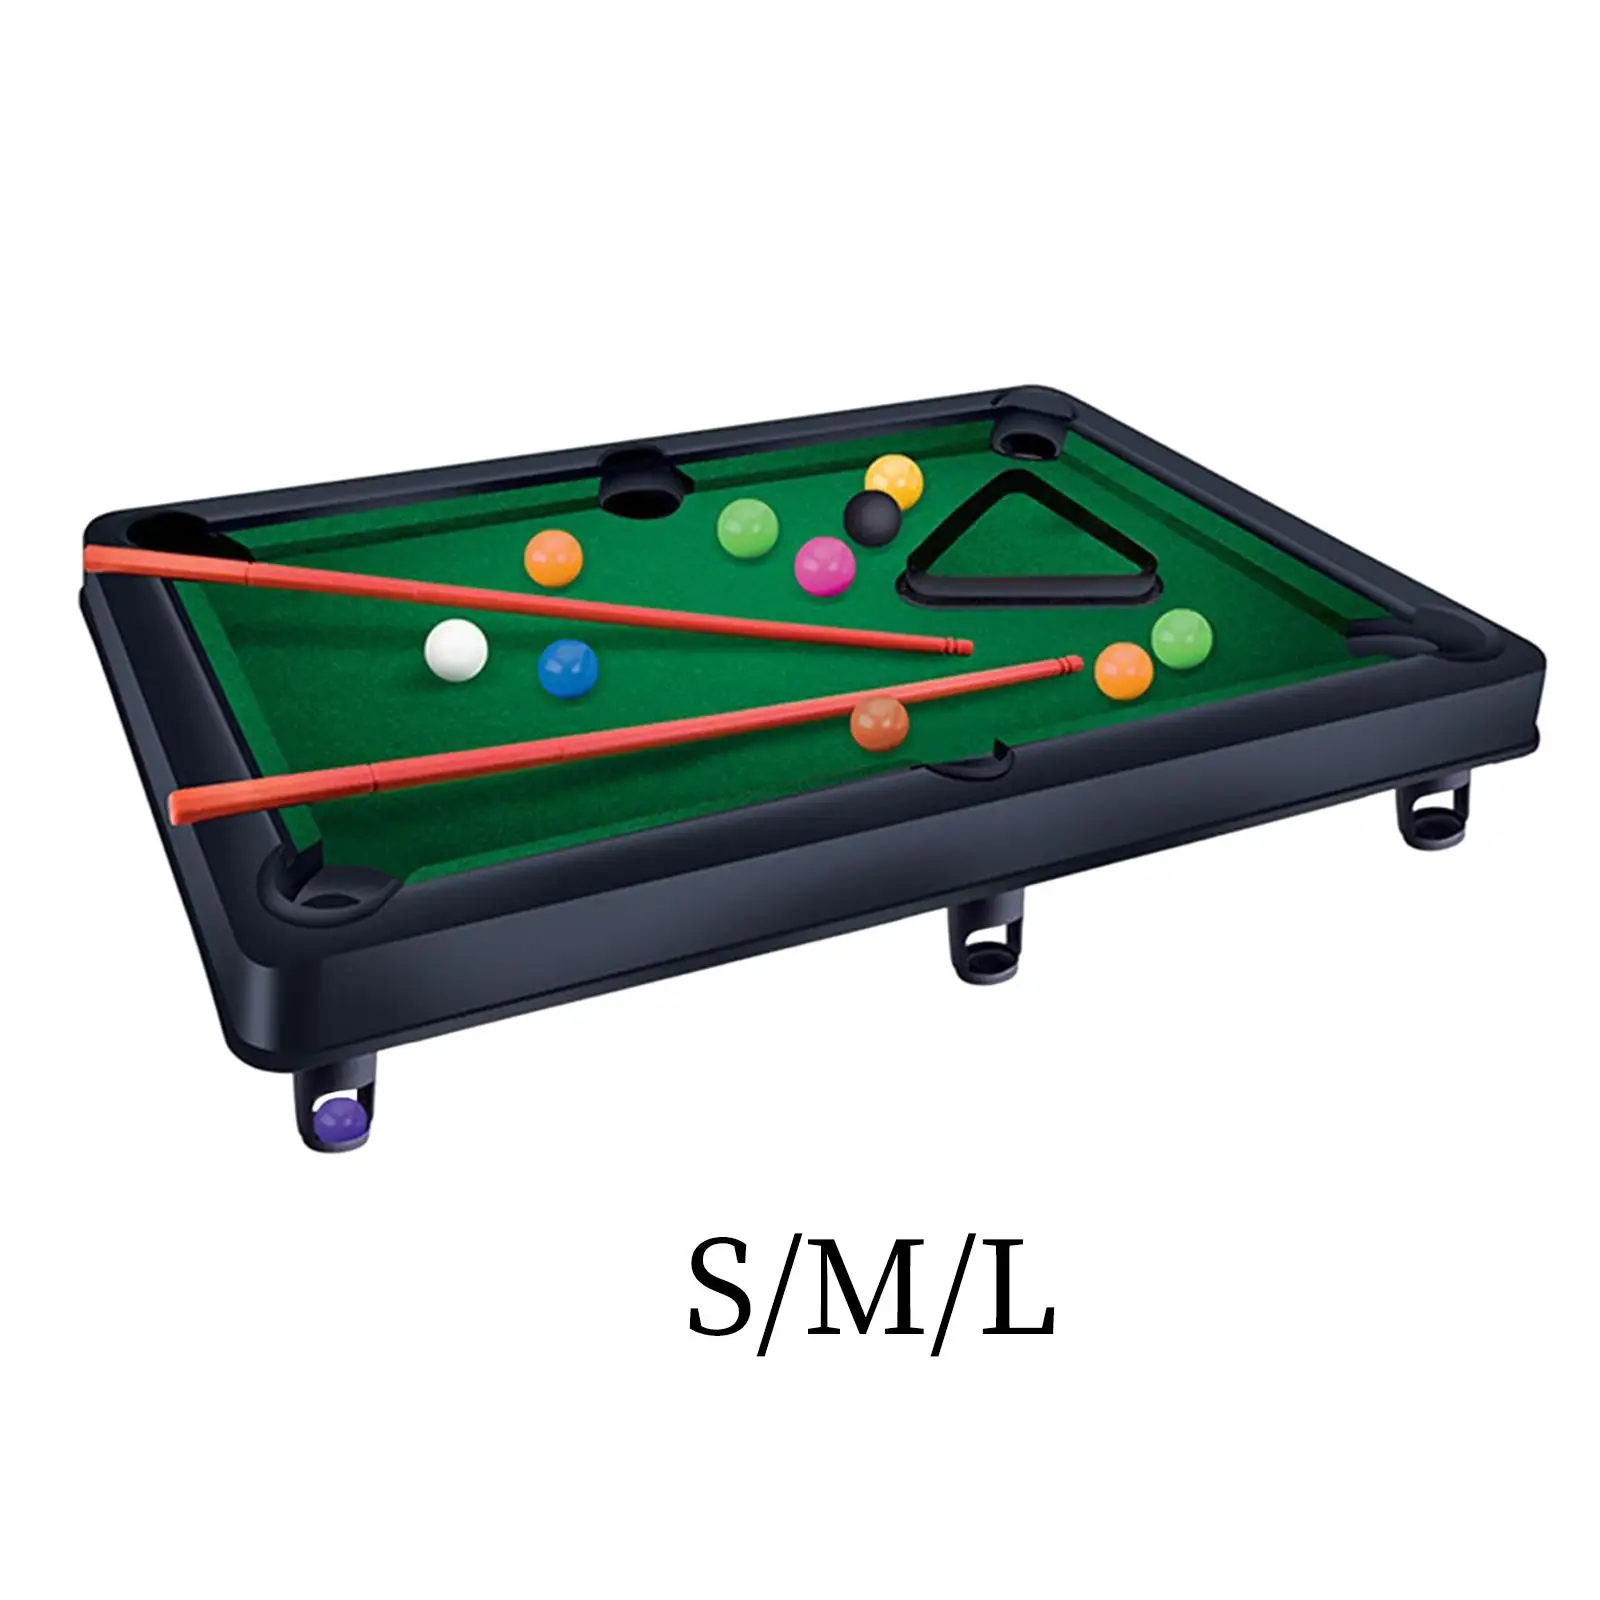 Mini Tabletop Pool Set with Game Balls for Desktop Living Room Playhouse